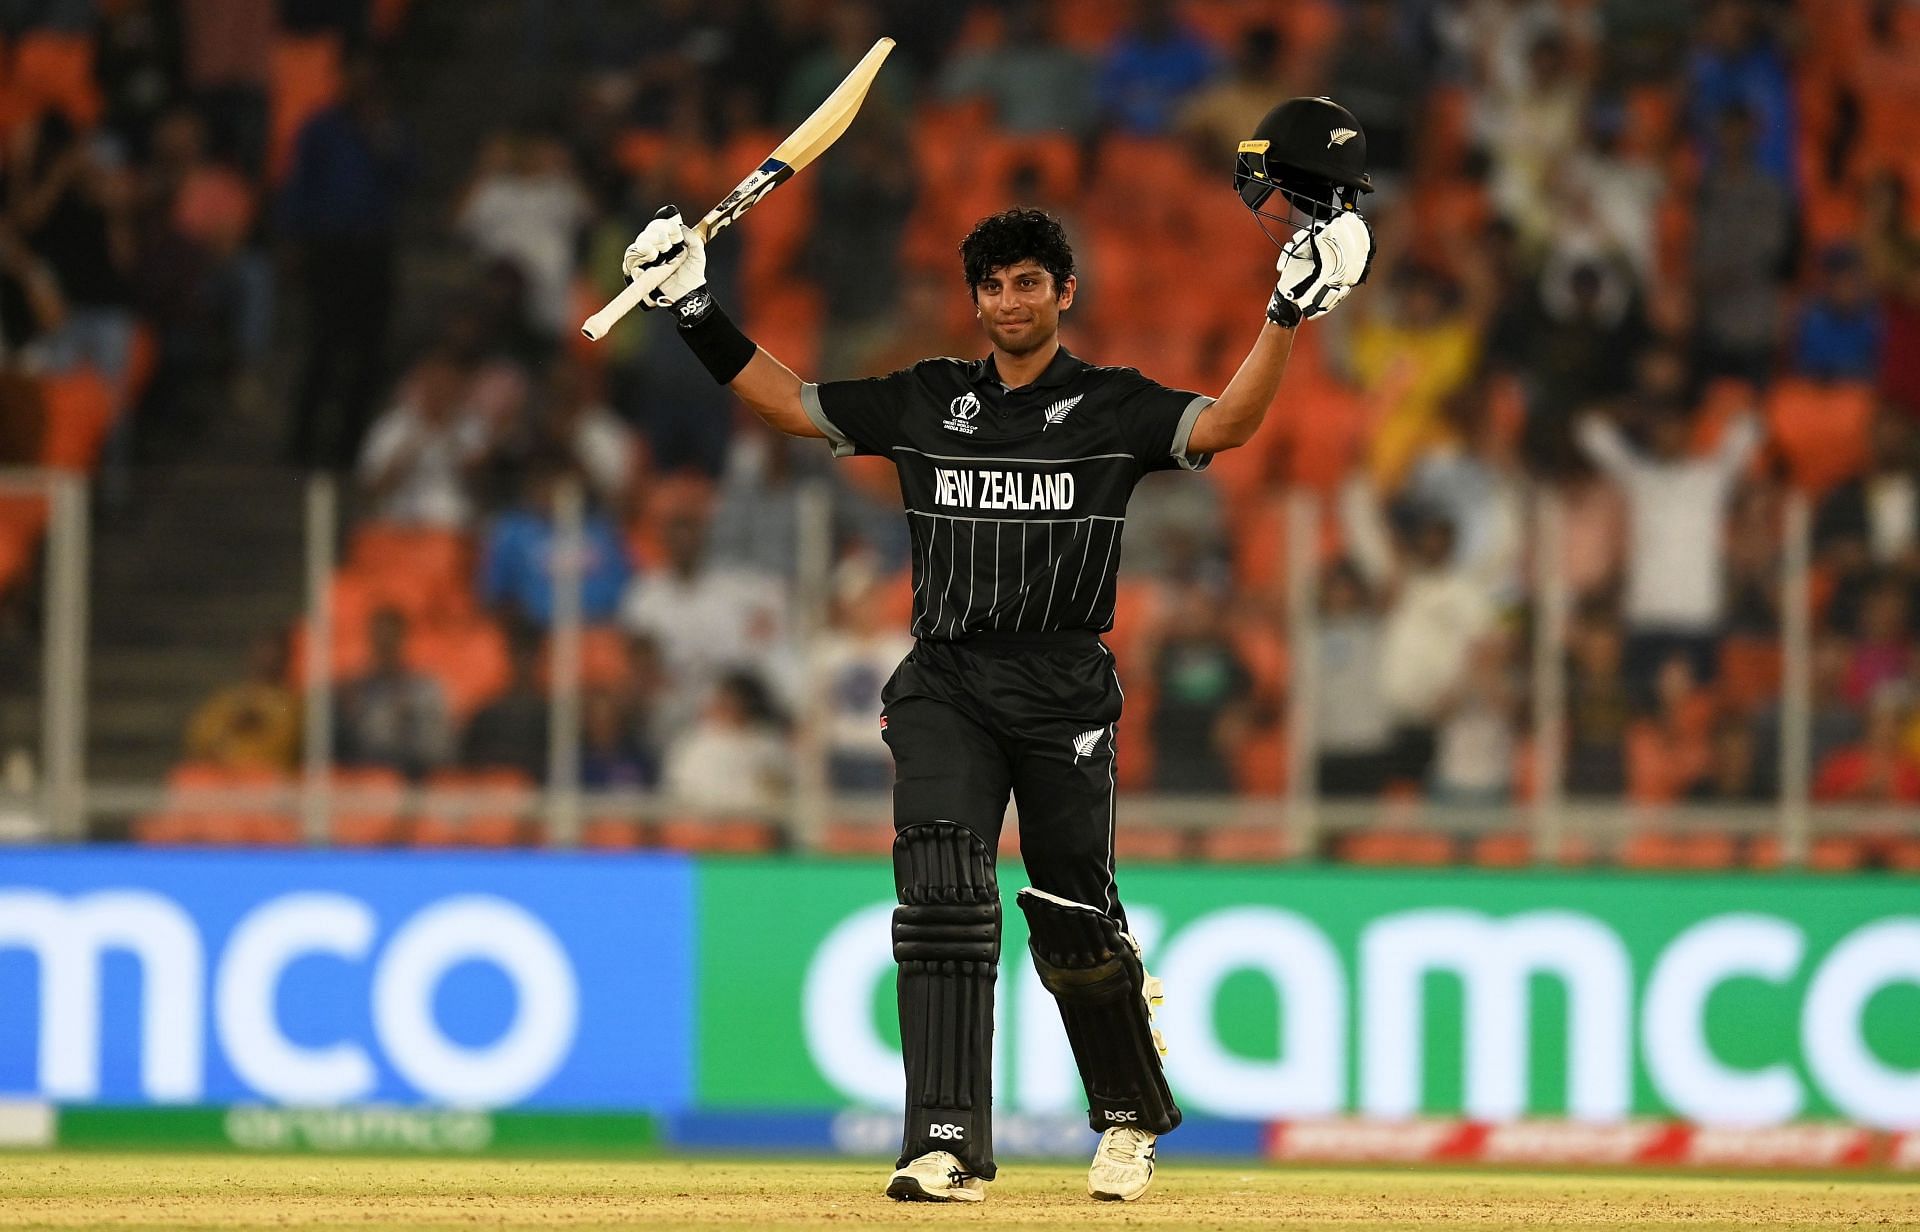 Rachin Ravindra acknowledging his maiden ODI century [Getty Images]